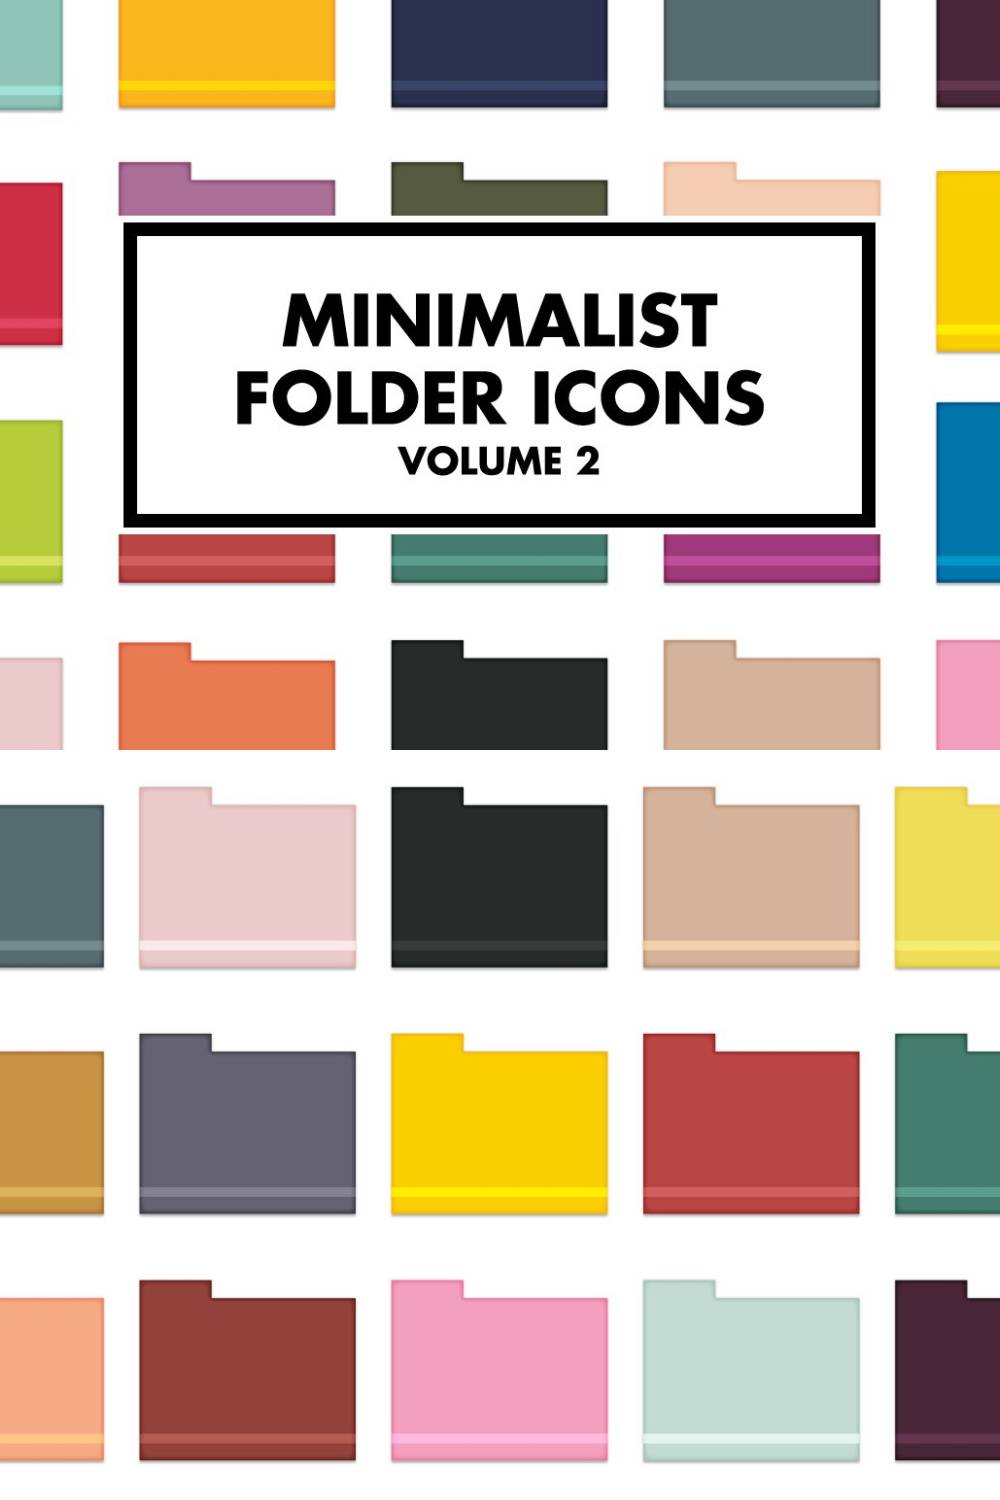 Minimalist Folder Icons Volume 2 Pinterest Cover.